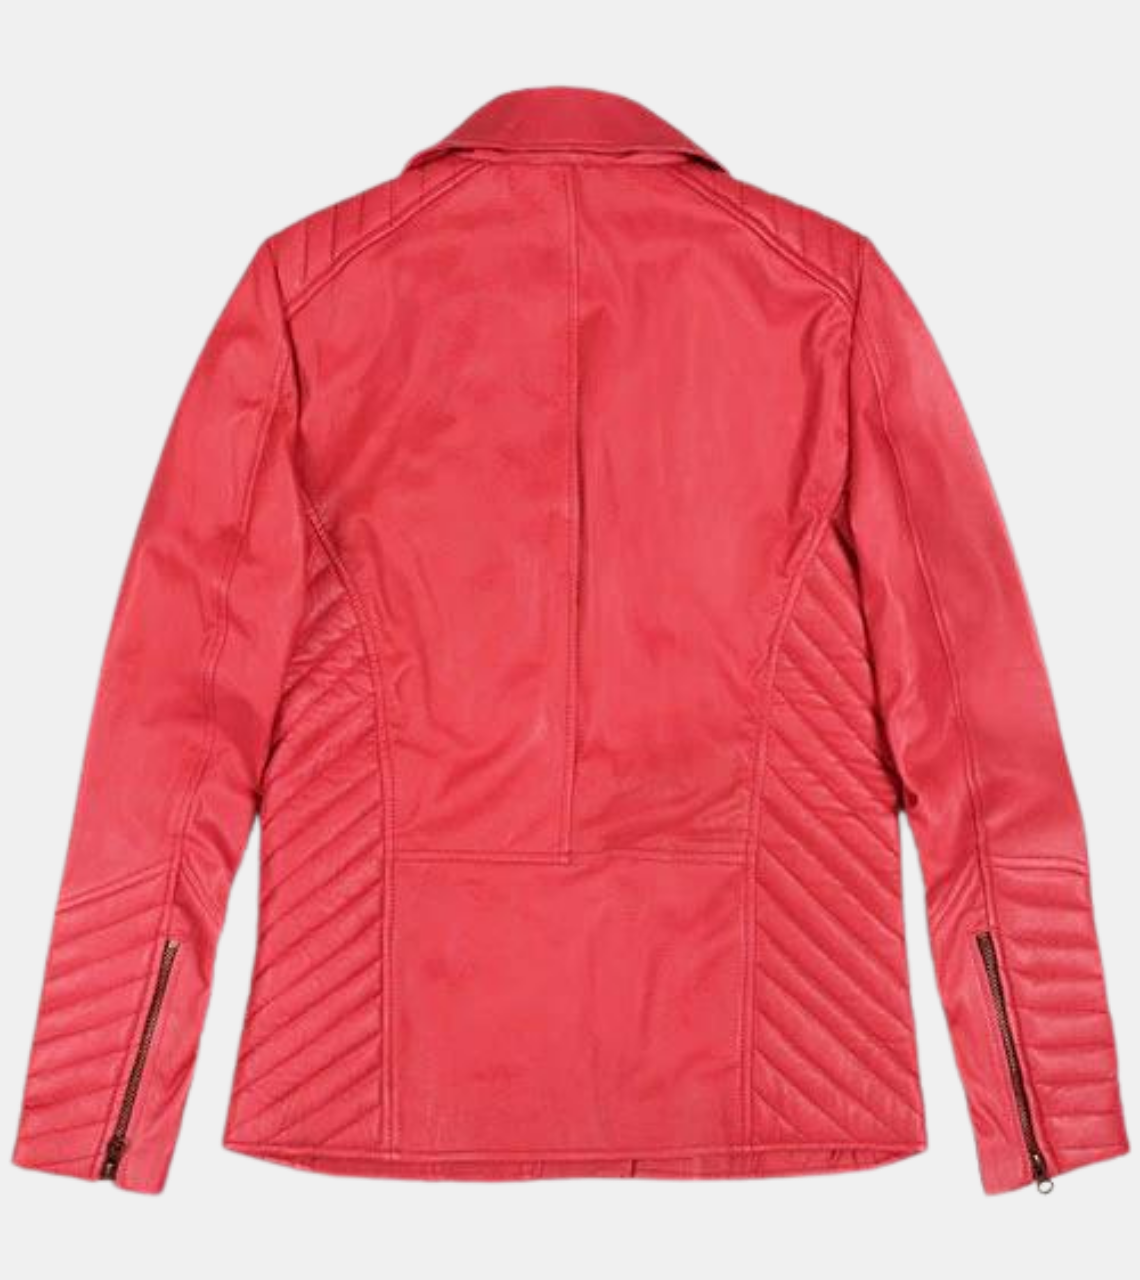  Red Biker's Leather Jacket